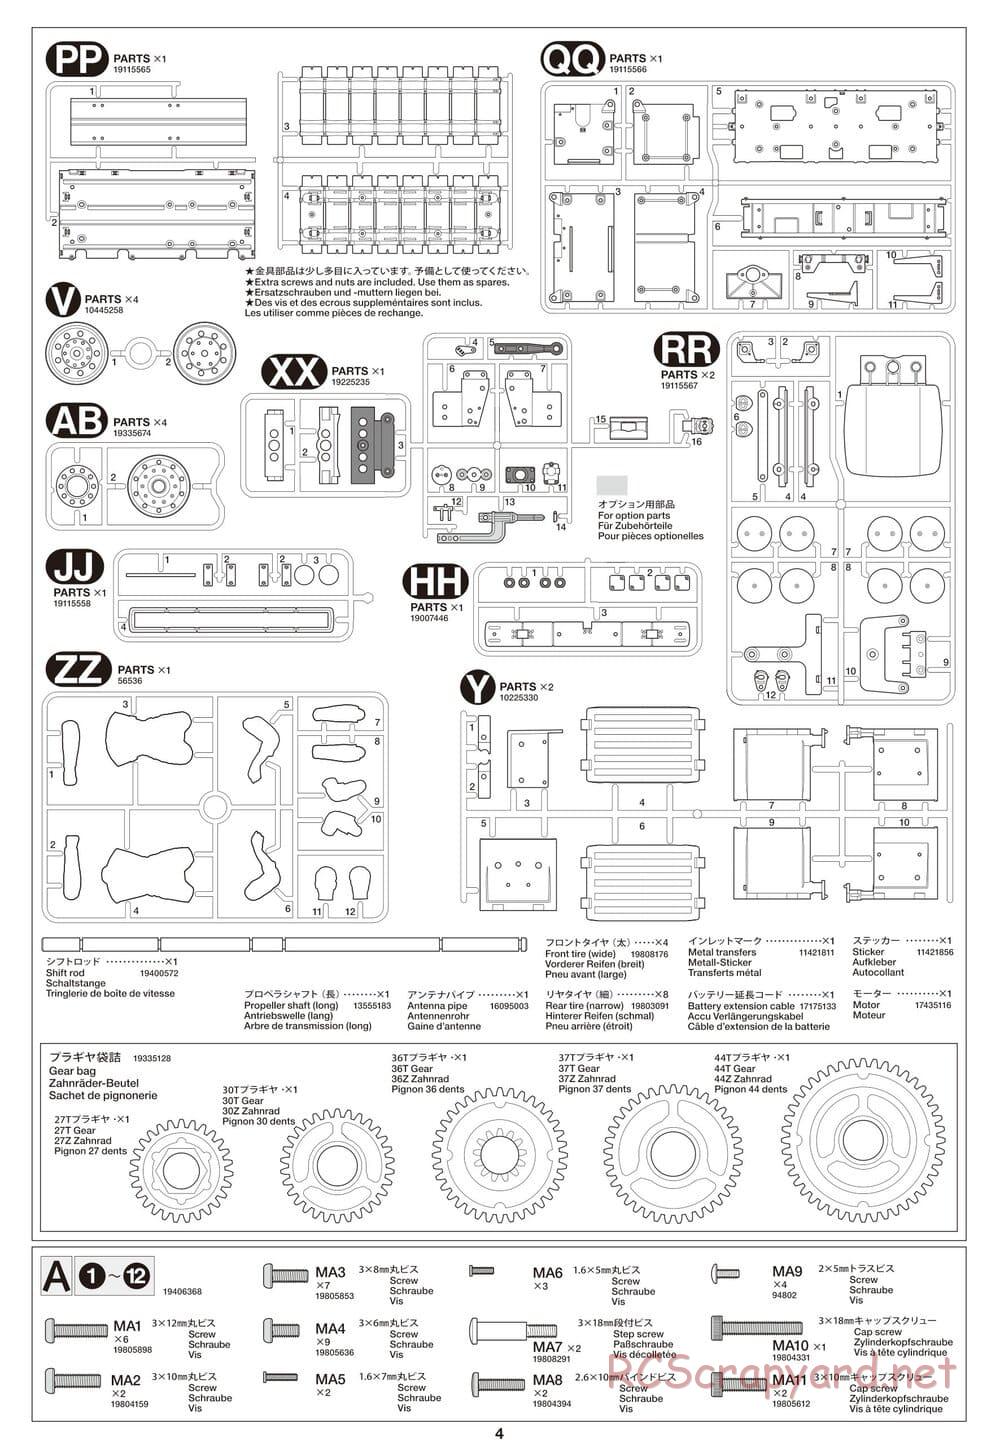 Tamiya - Scania 770 S 8x4/4 Chassis - Parts Manual - Page 4